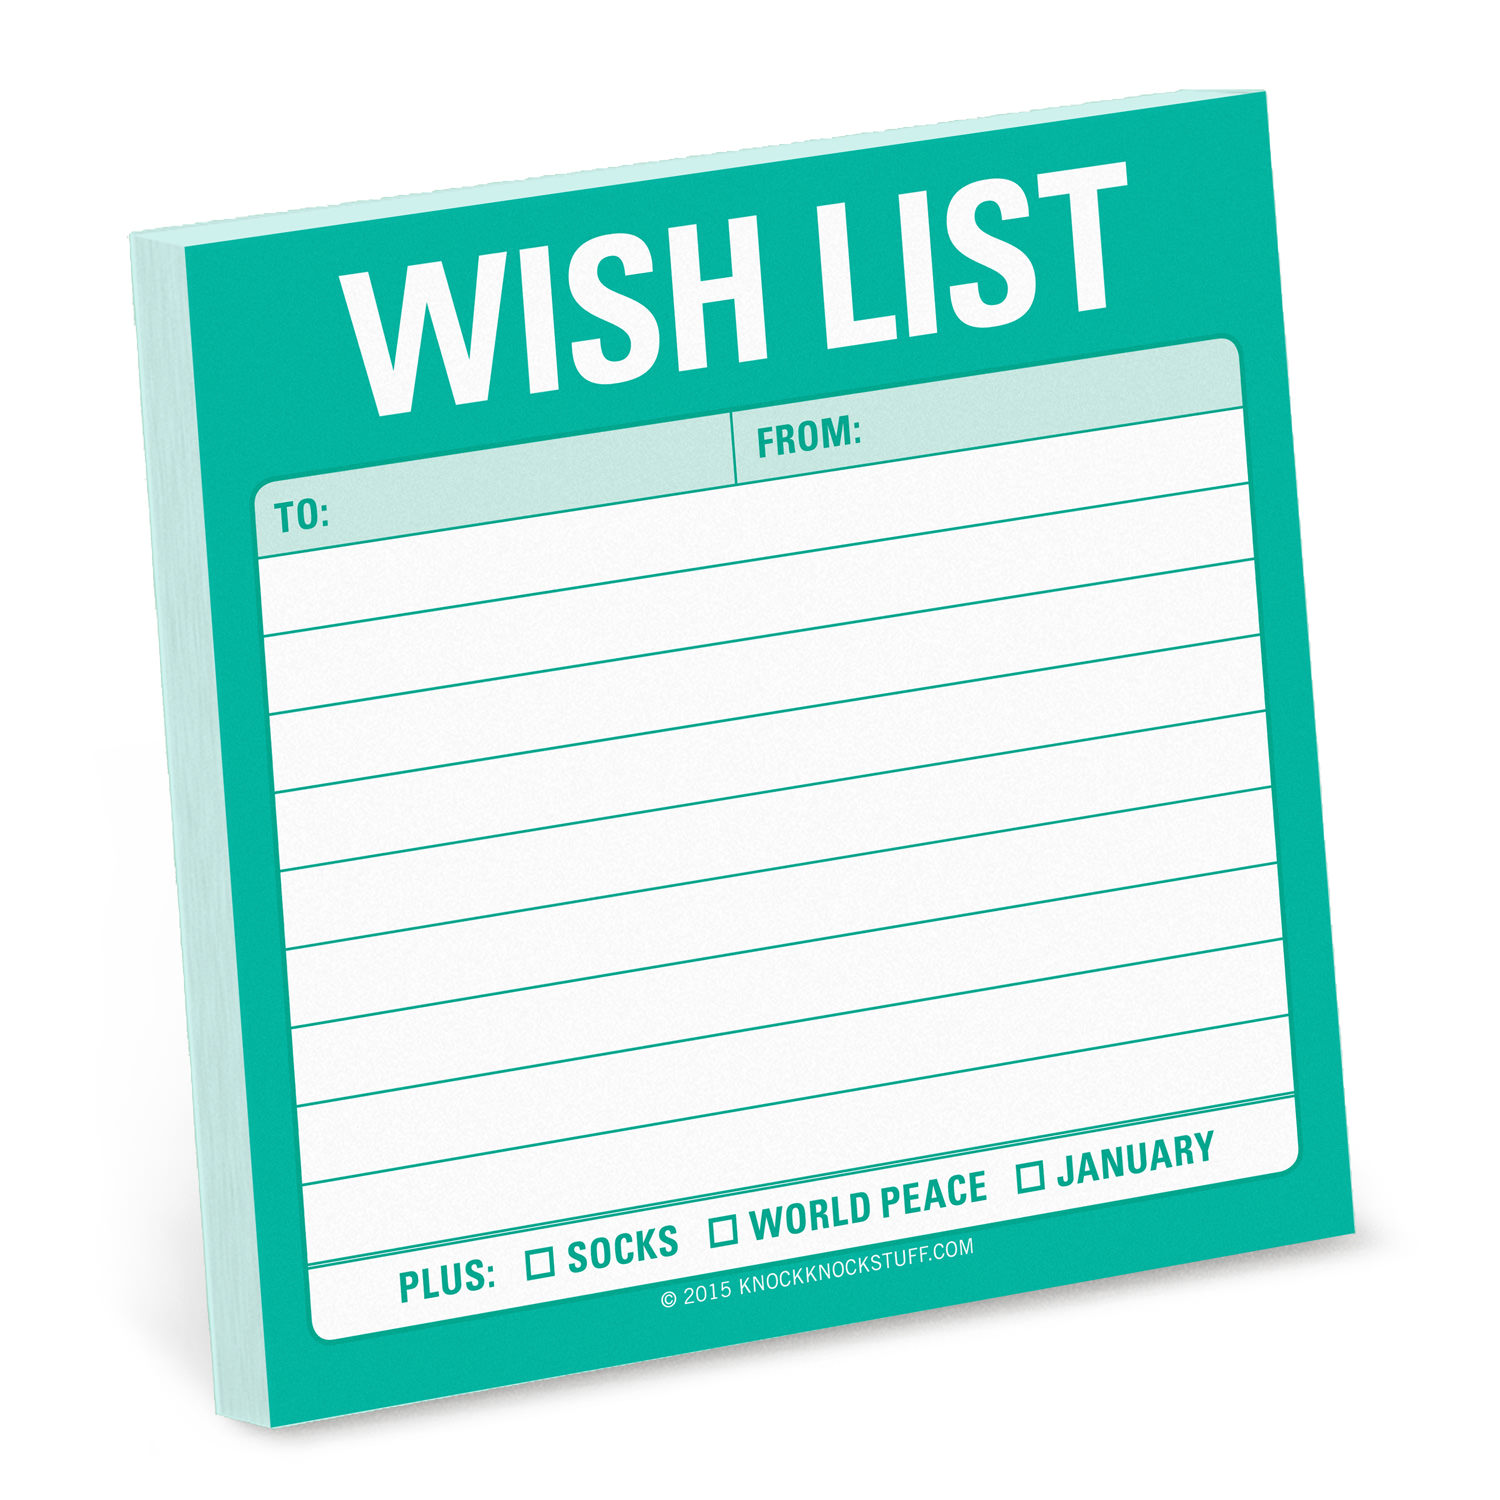 Wish list Sticky Note (Post-It lappar) - KNOCK KNOCK